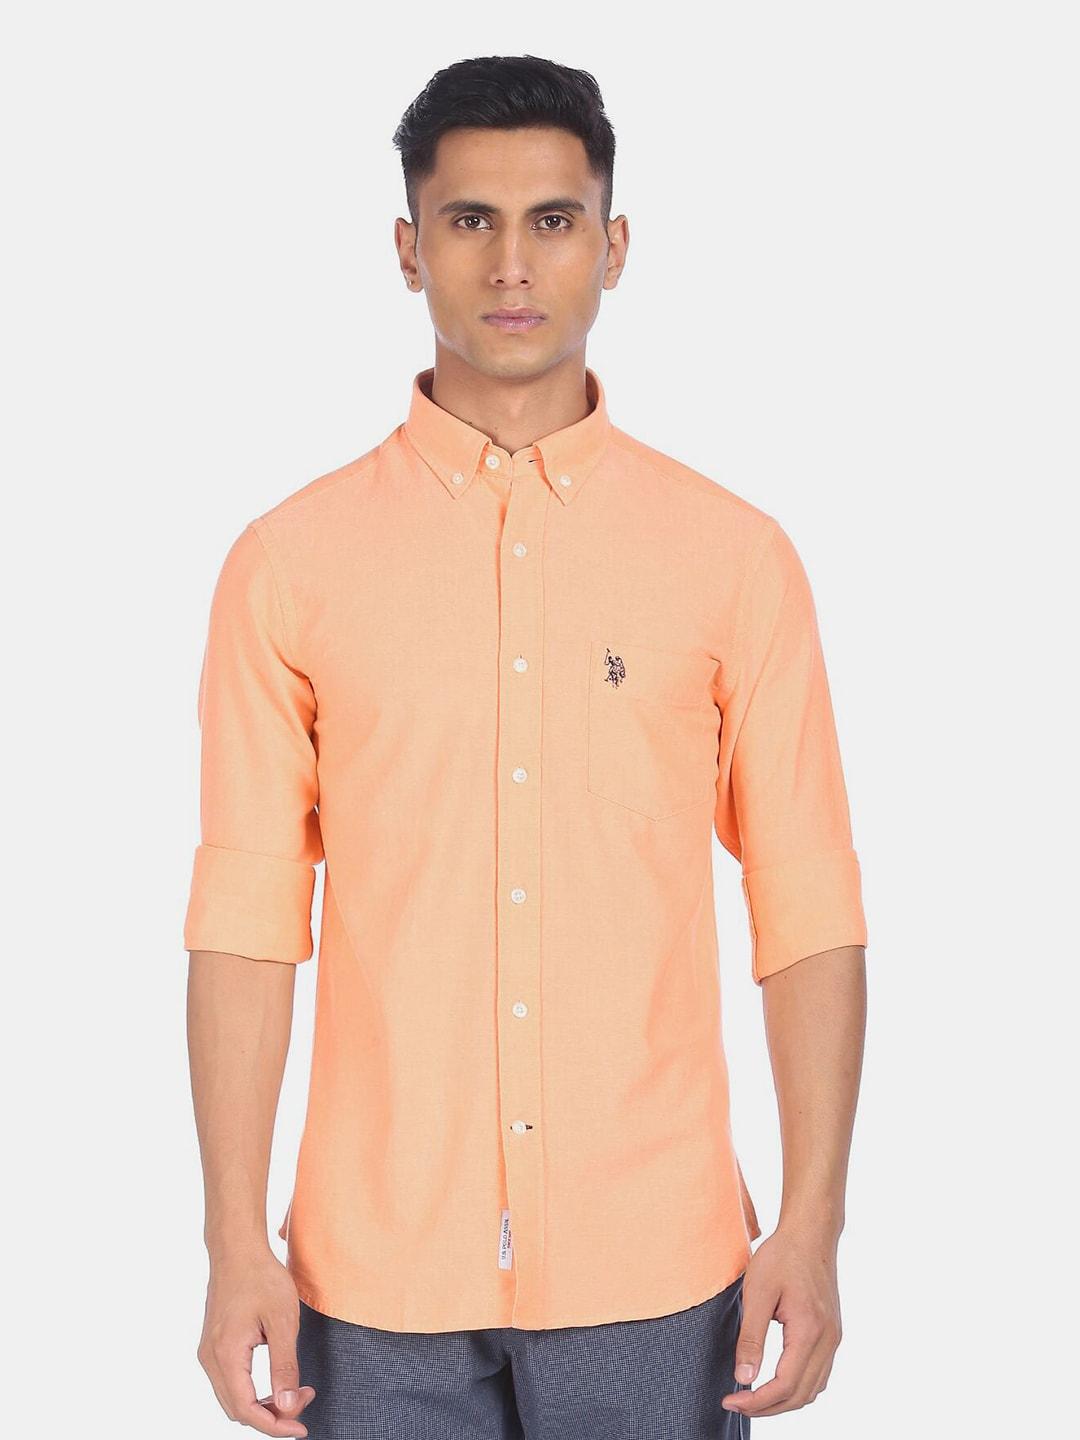 u s polo assn men orange casual shirt